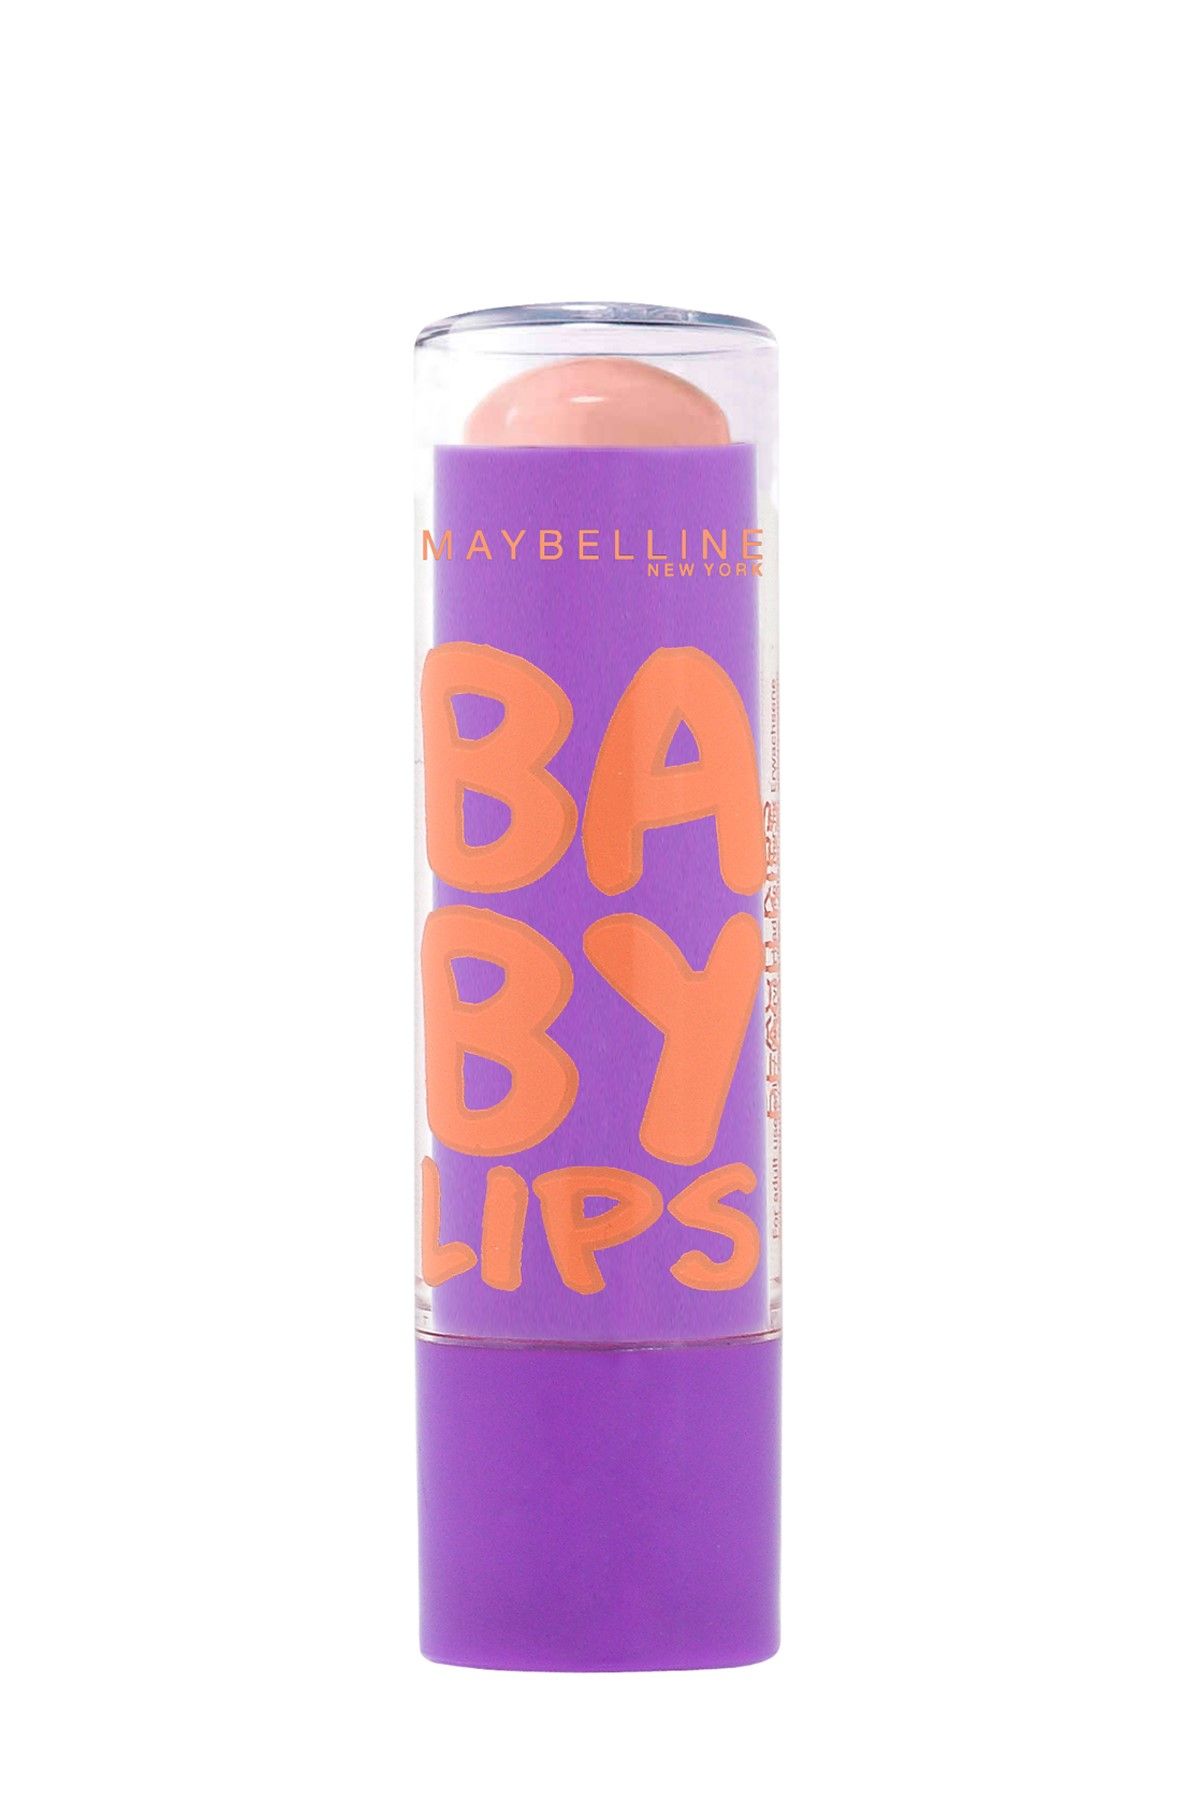 Maybelline New York بالم لب و مرطوب کننده لب Maybelline Baby Lips رایحه هلویی